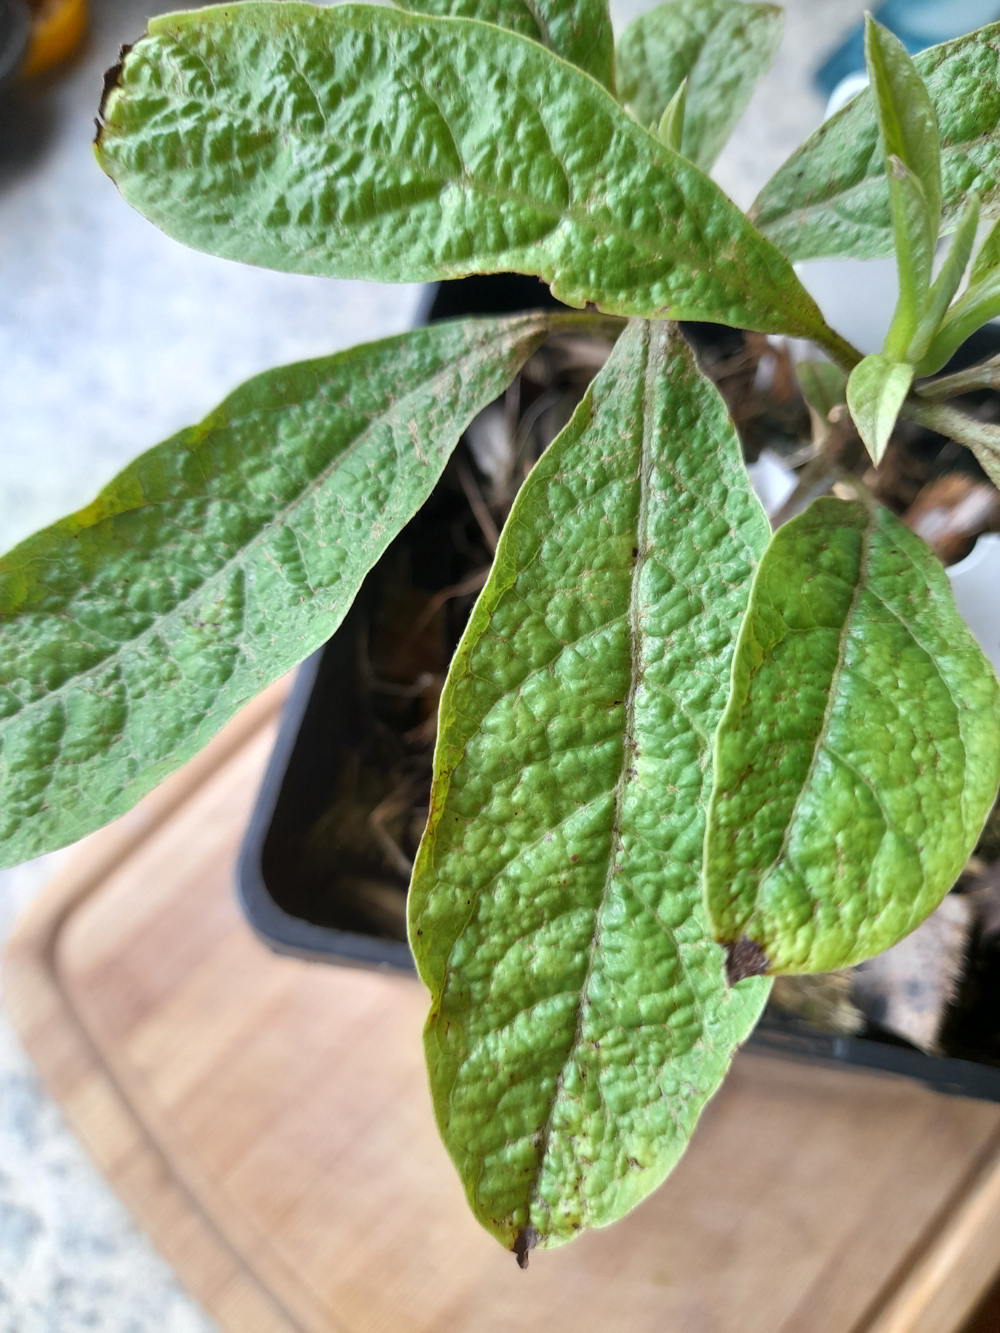 Bullate
        leaf mutation in an avocado seedling